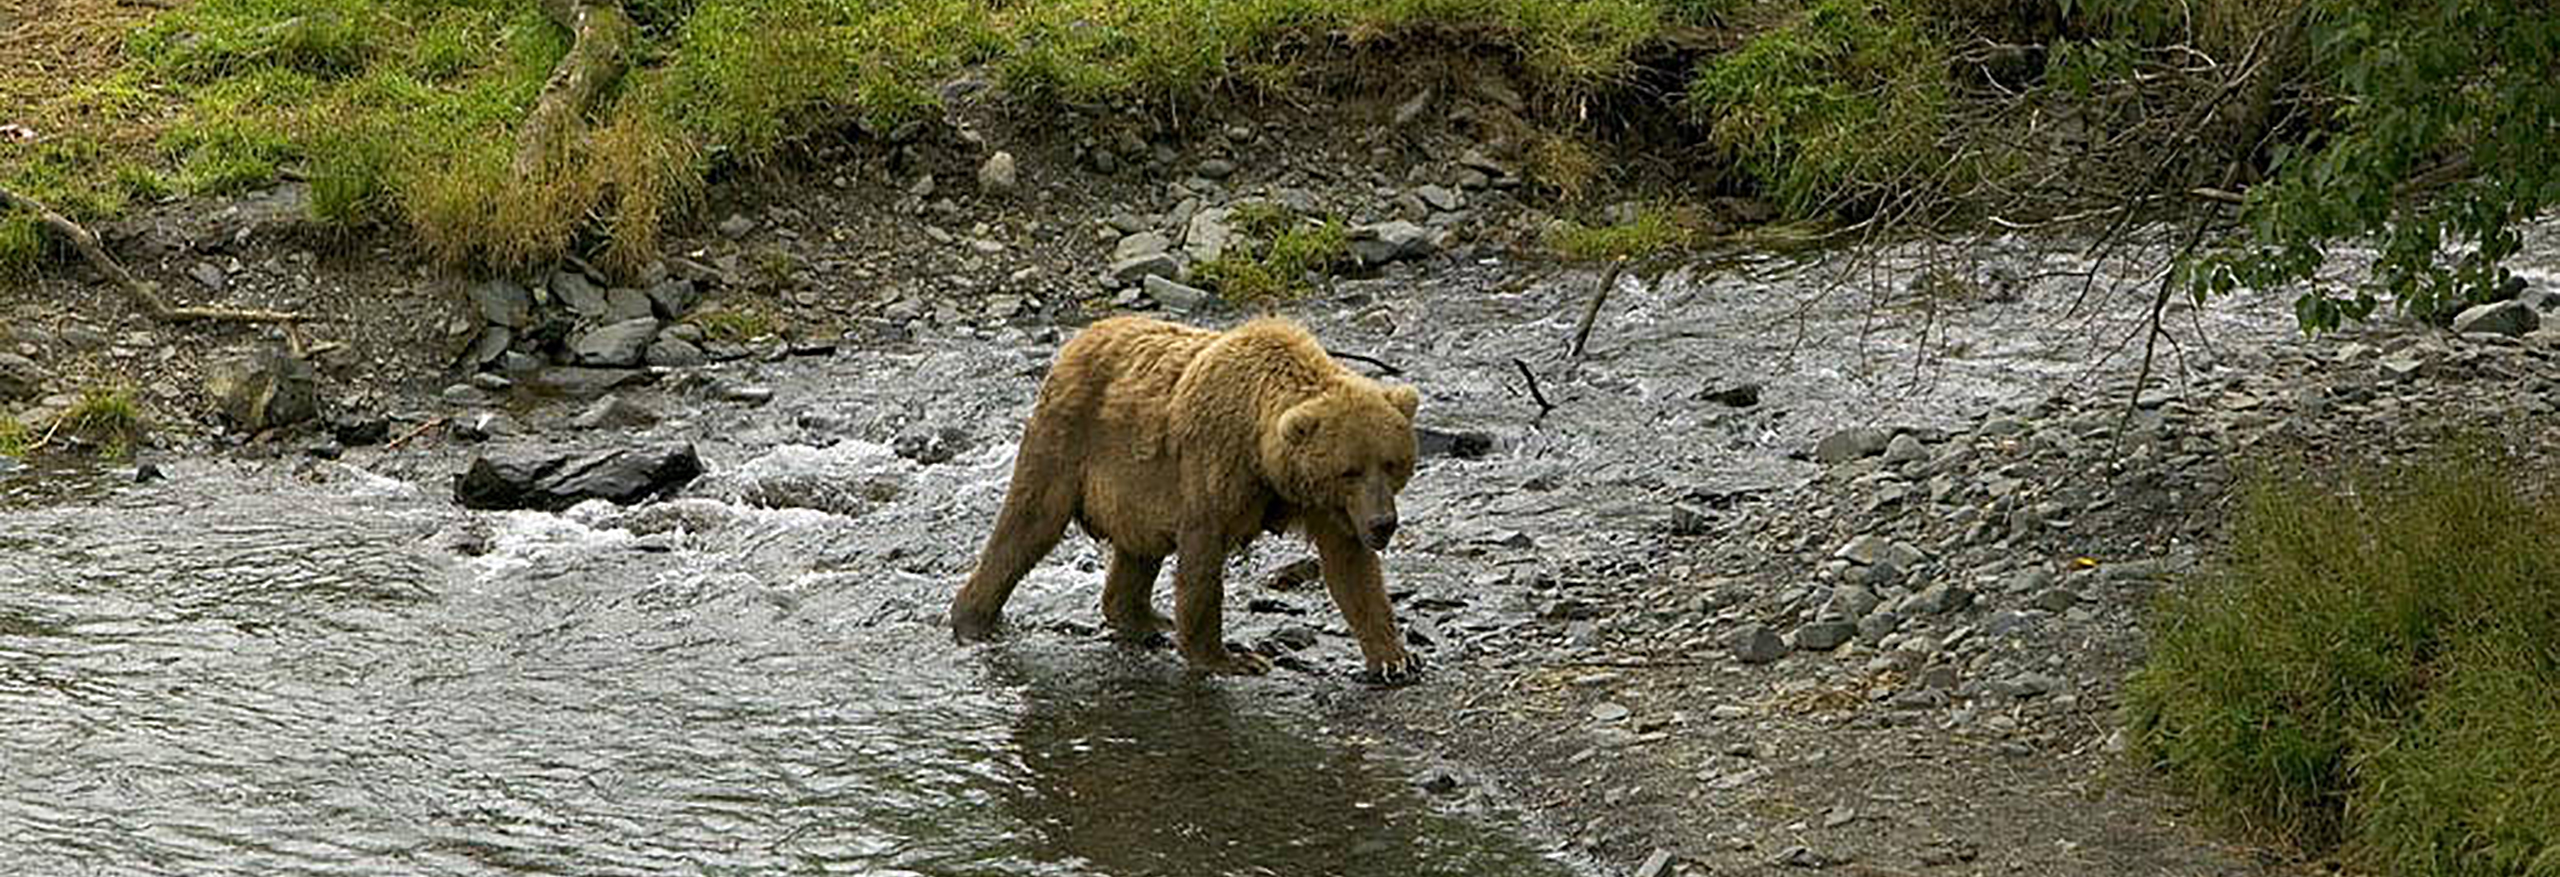 Brown bear at river's edge